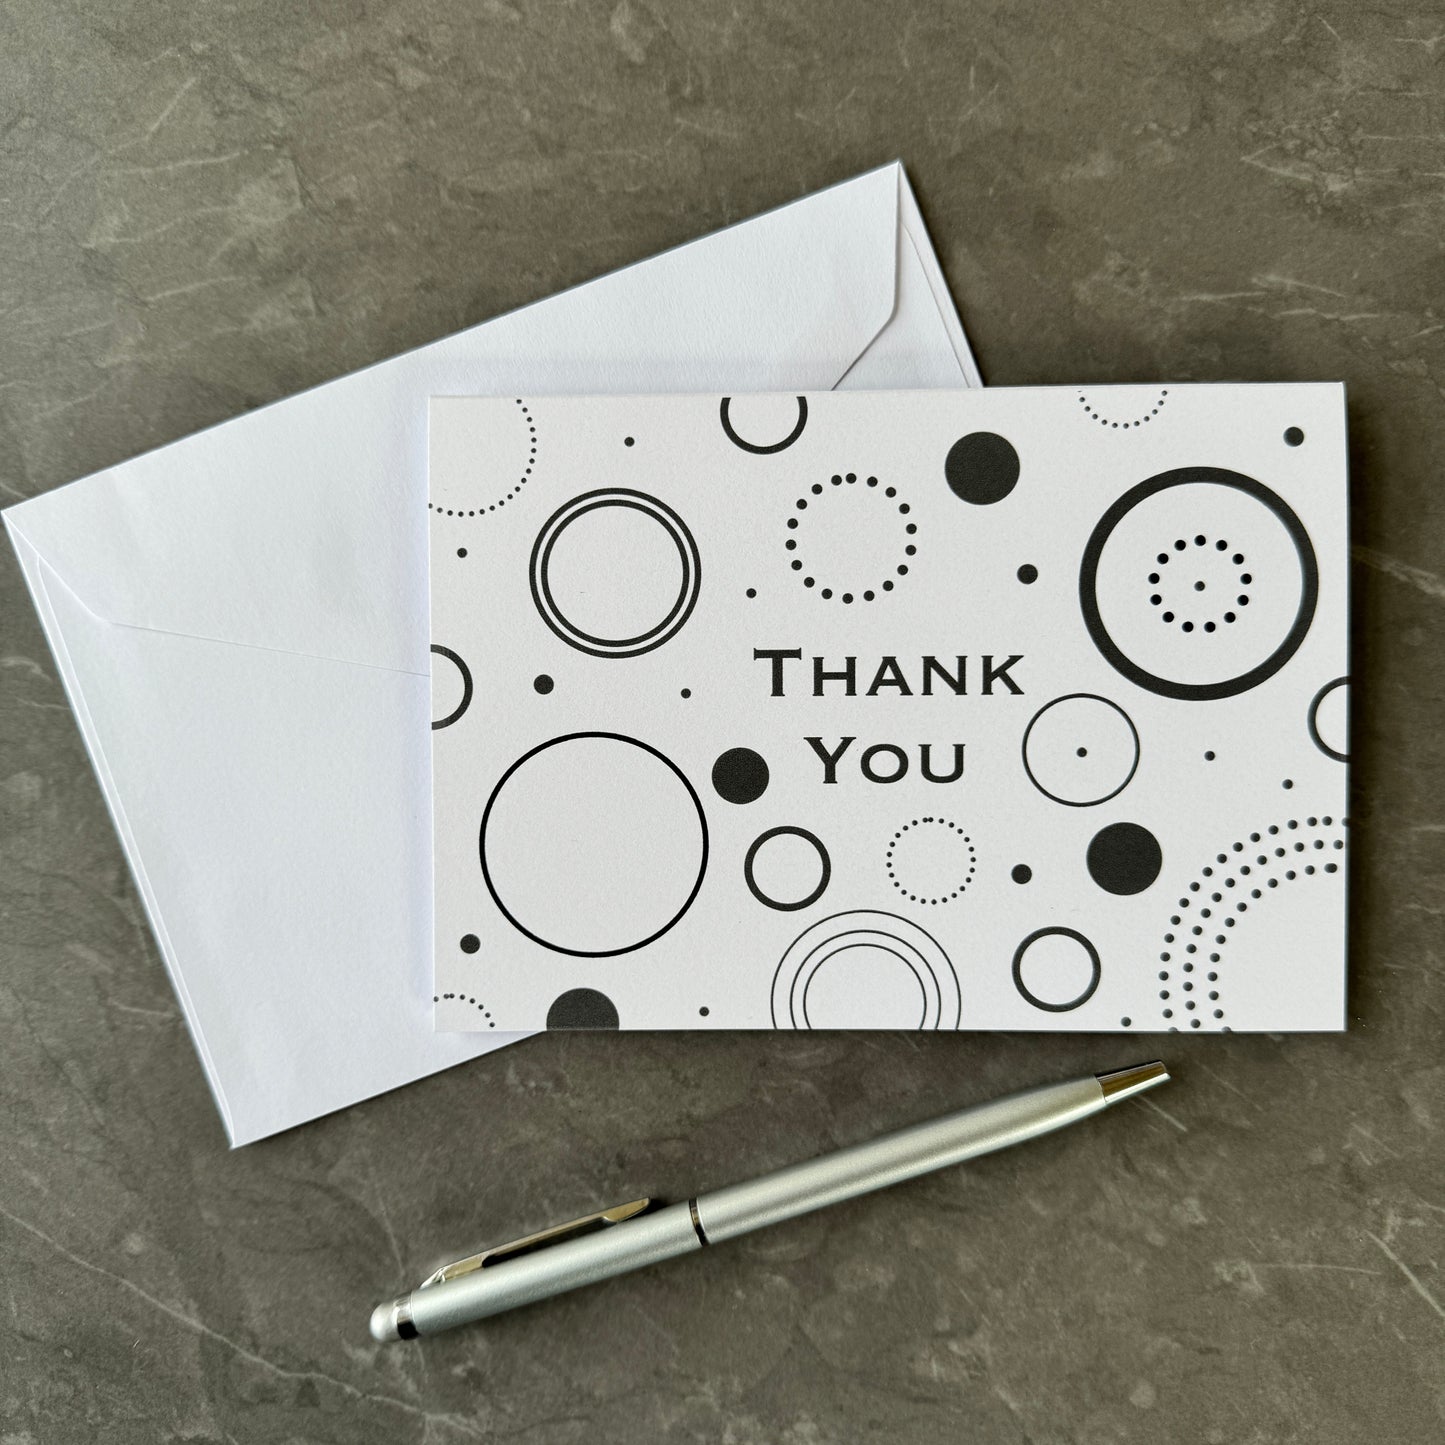 Thank You Note Card set - Circles and Dots Pattern